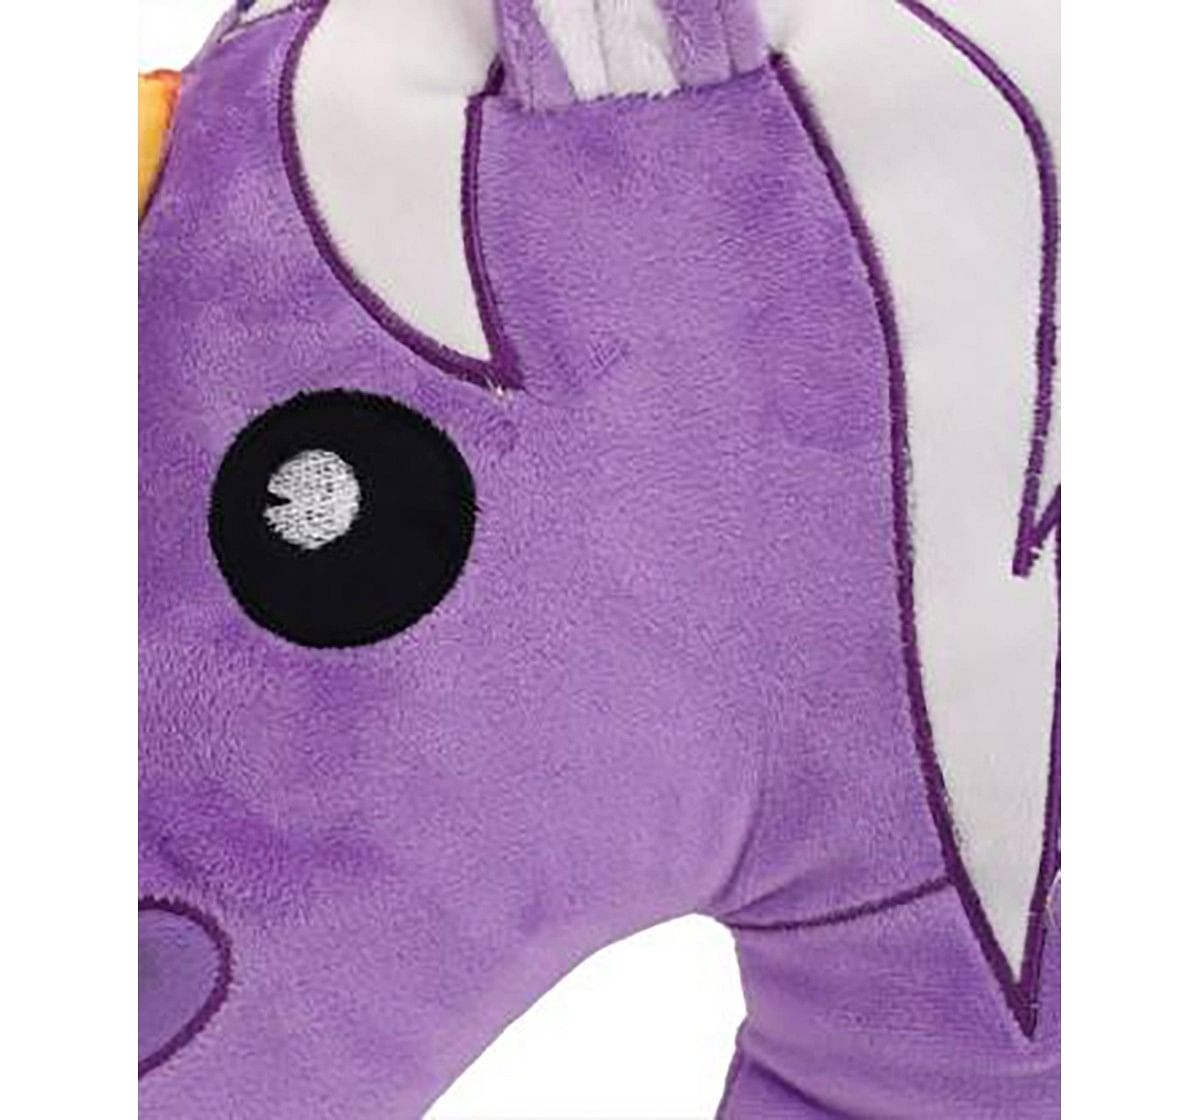 Emoji Unicorn 30 Cm Plush Accessory for Kids age 12M+ (Purple)